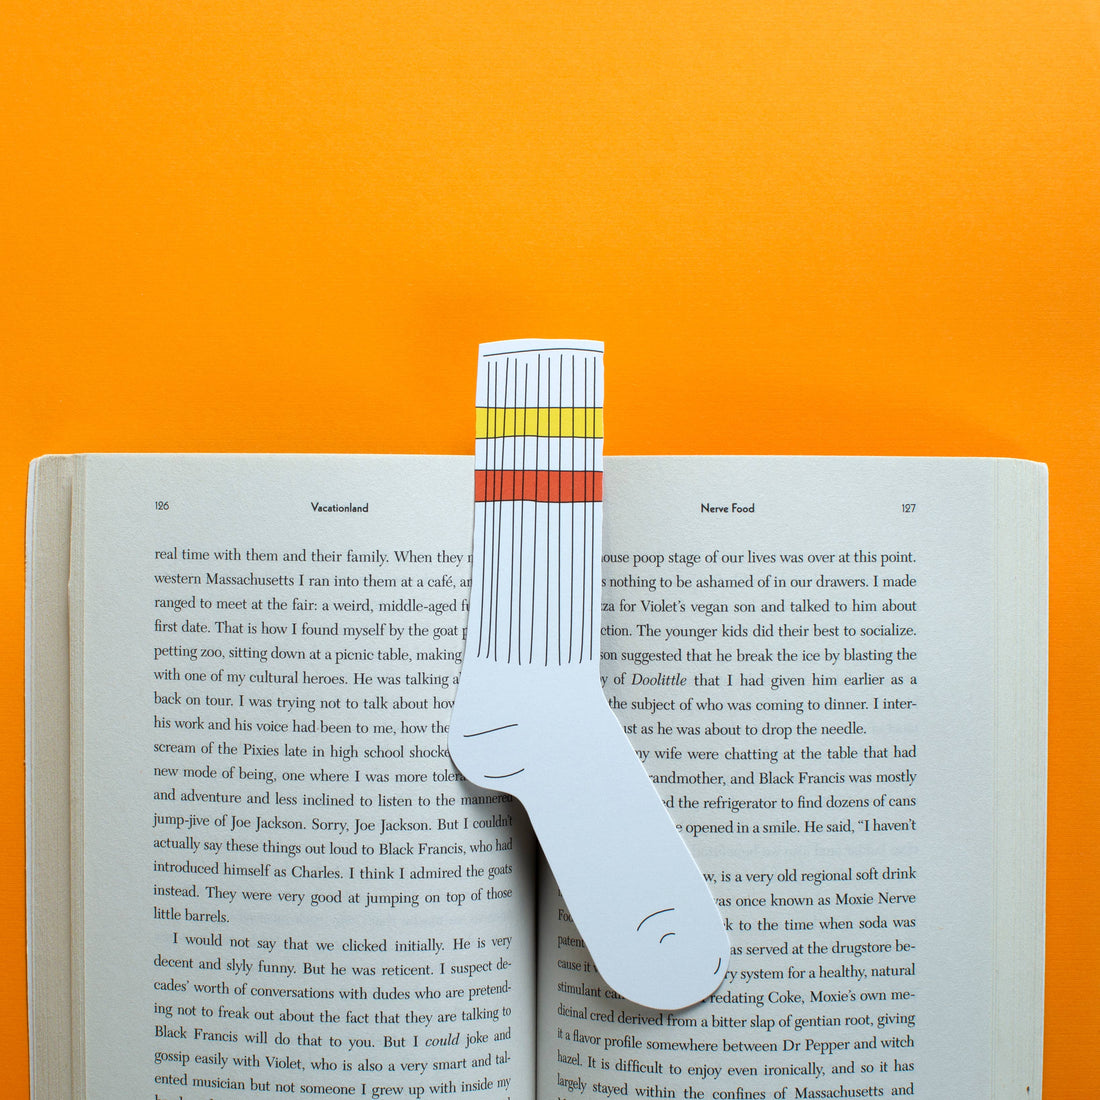 Sock Bookmark (it&